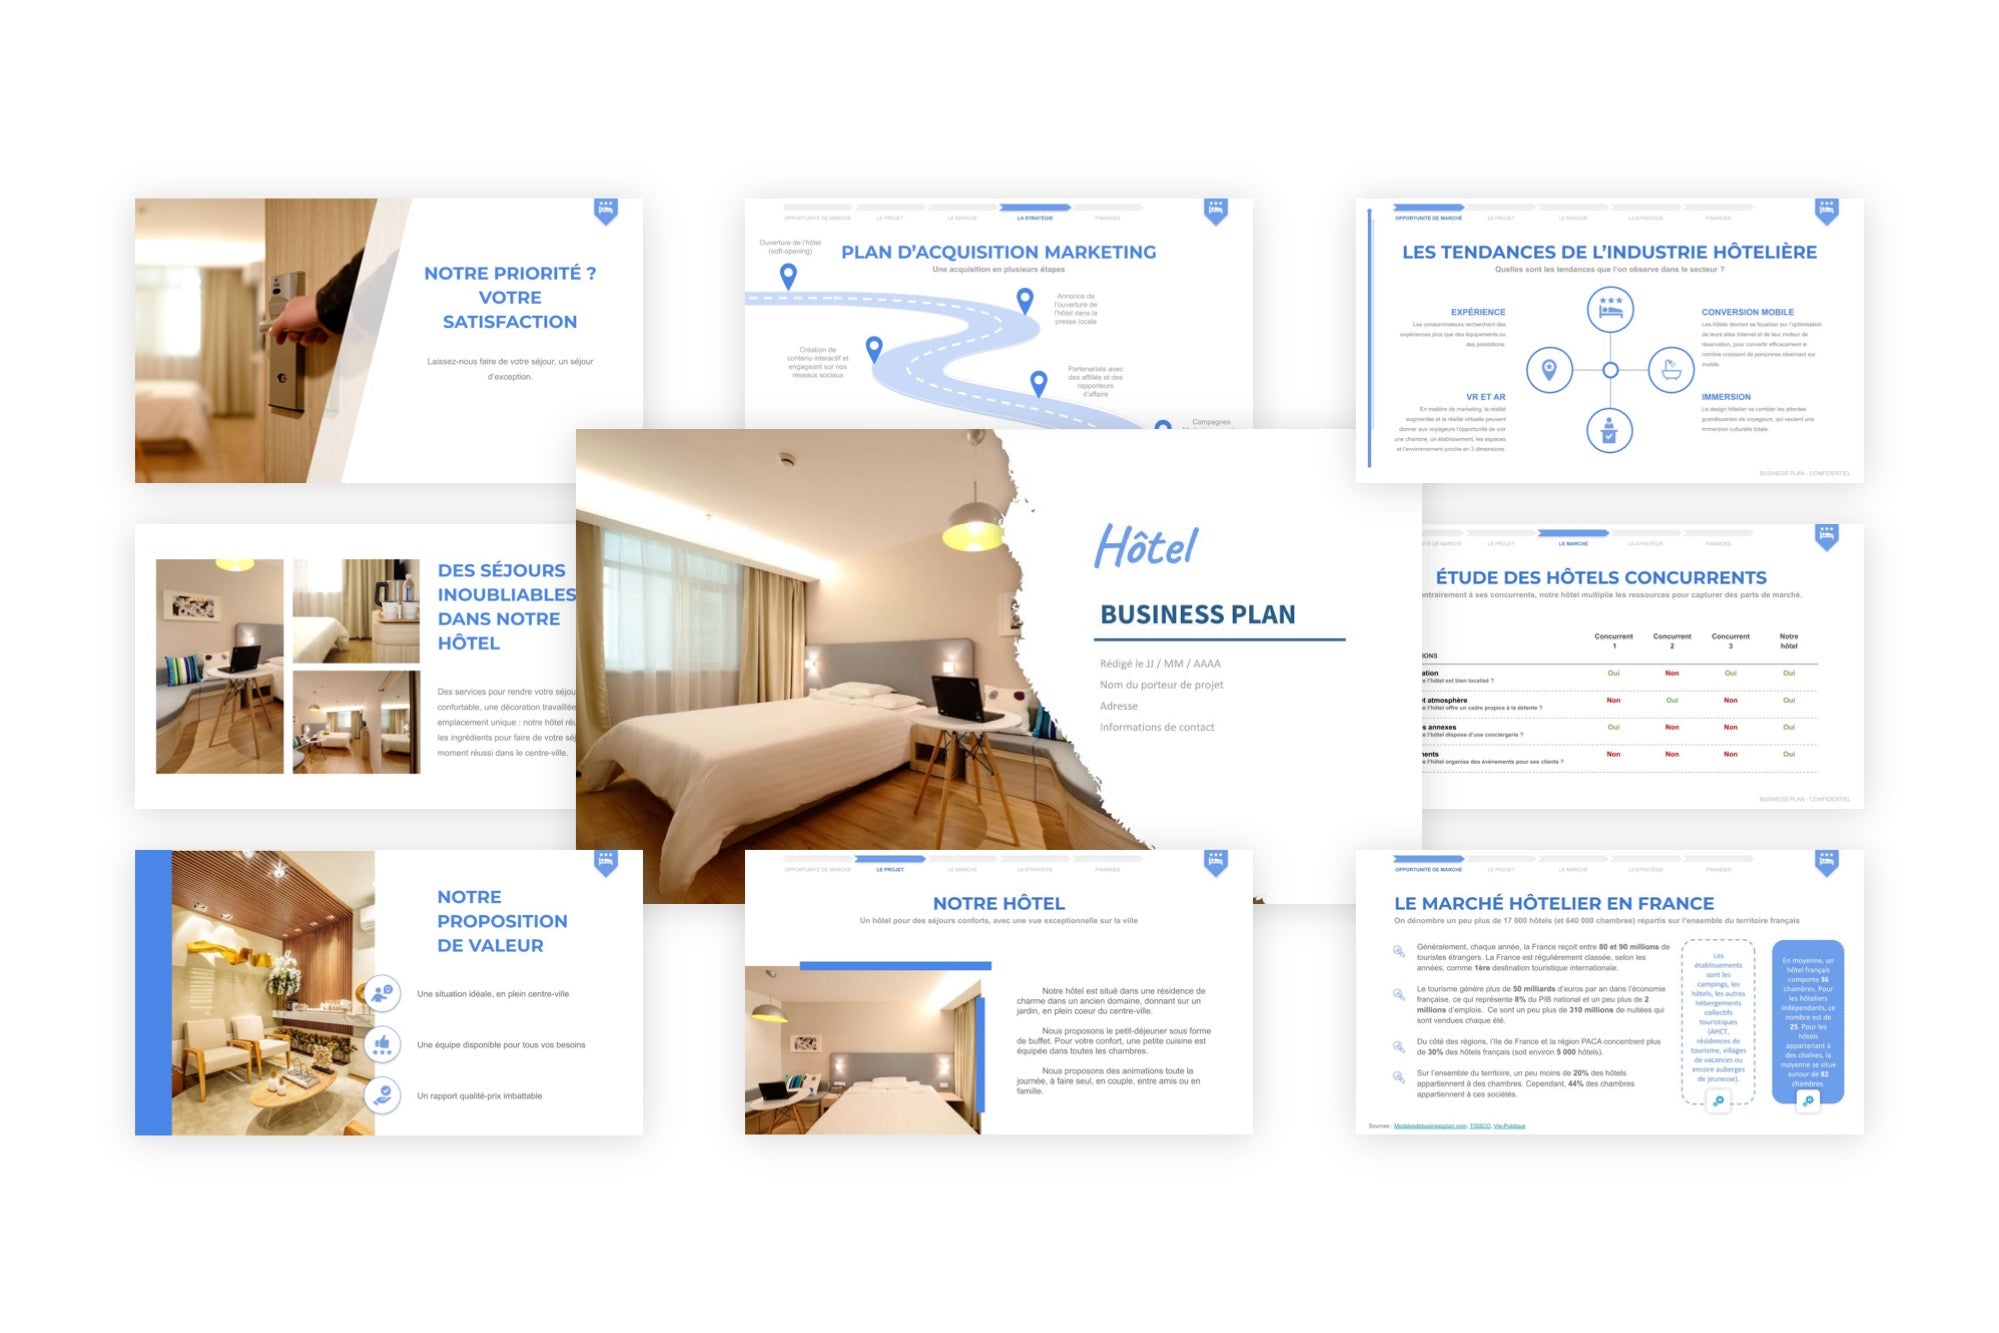 business plan on hotel pdf